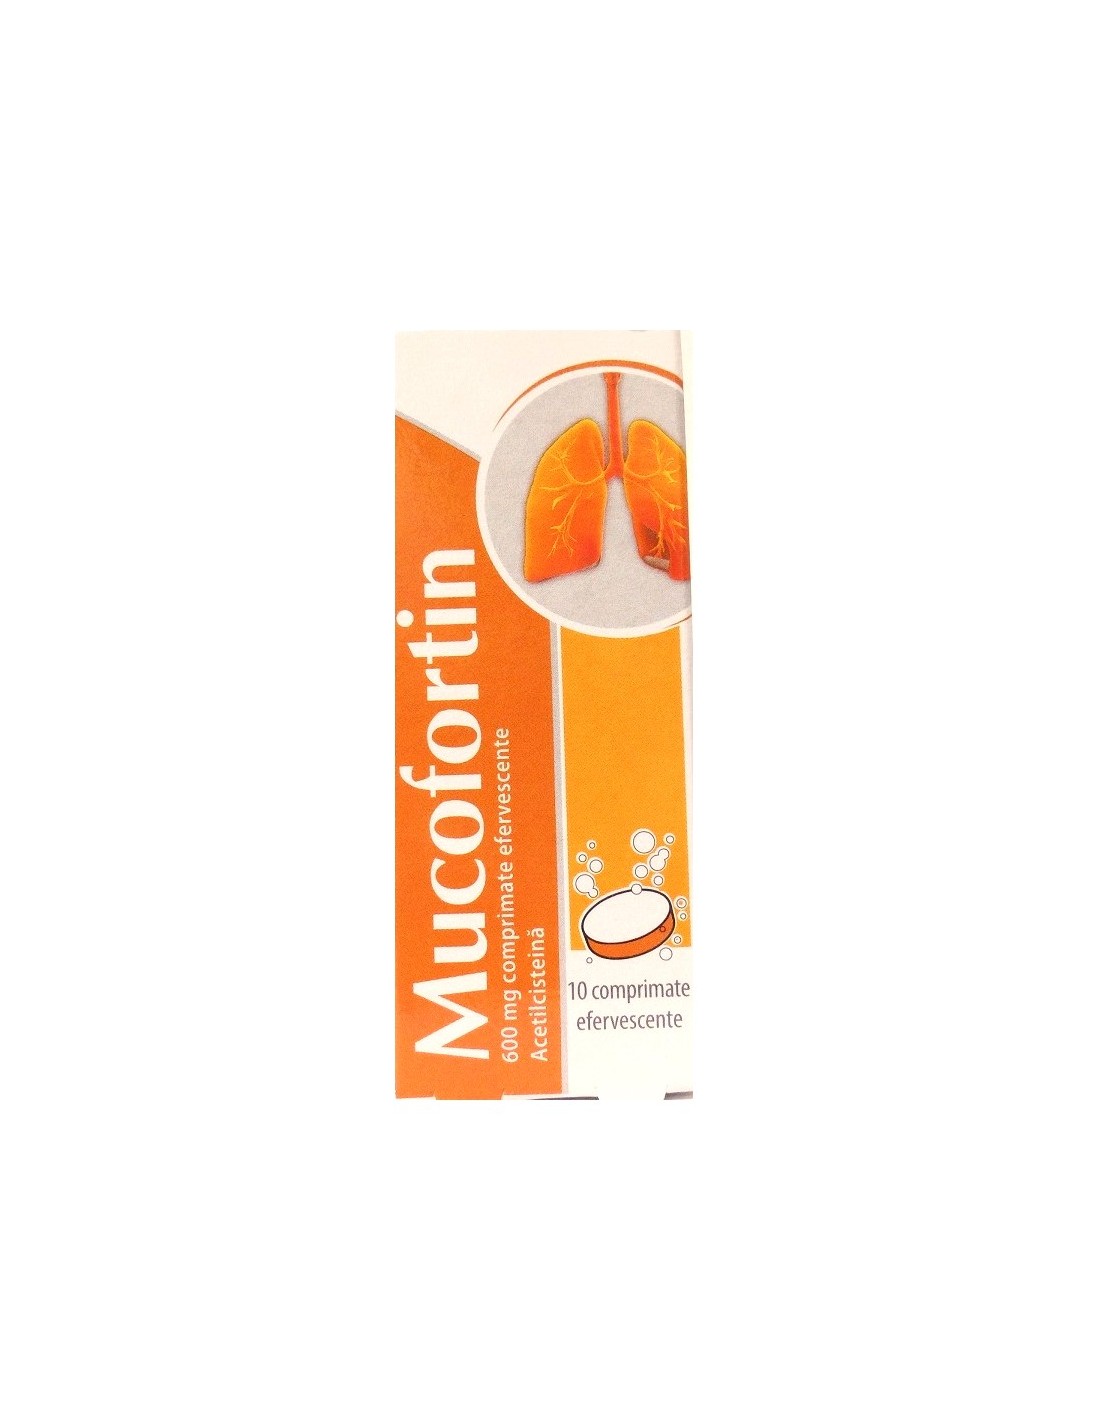 Mucofortin 600 mg, 10 comprimate efervescente, Natur Produkt -  TUSE-CU-SECRETII - ZDROVIT